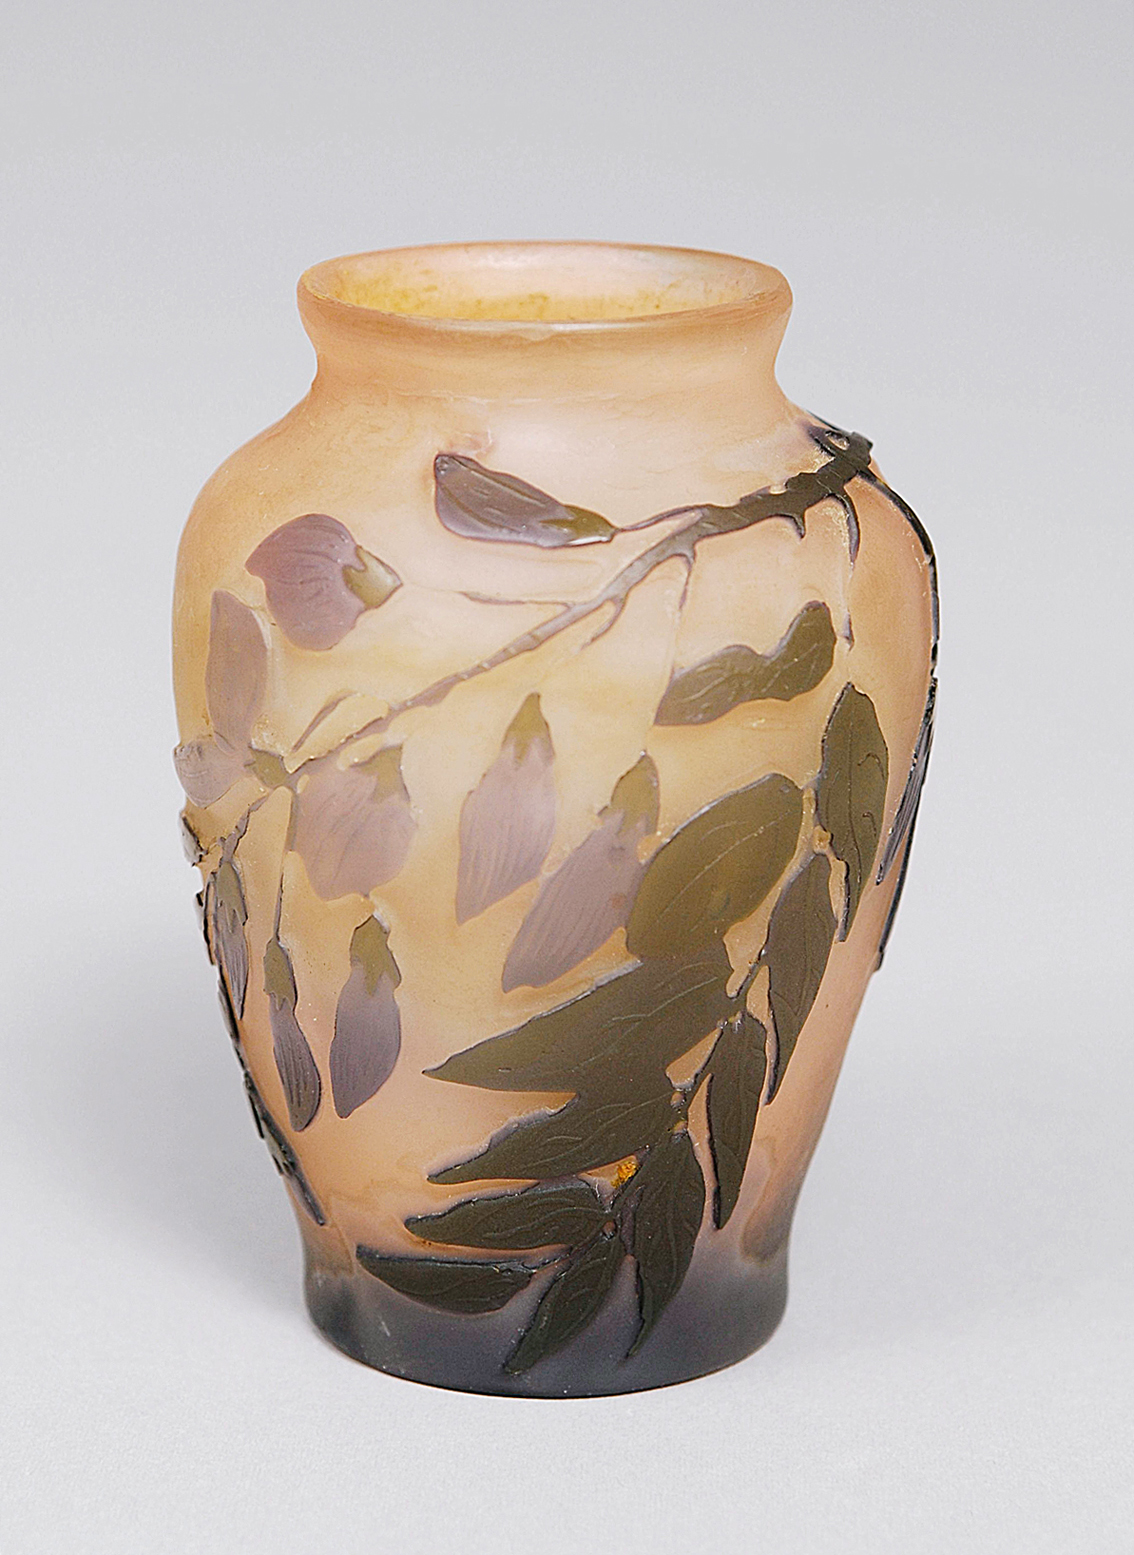 A small art-nouveau vase with wisterias